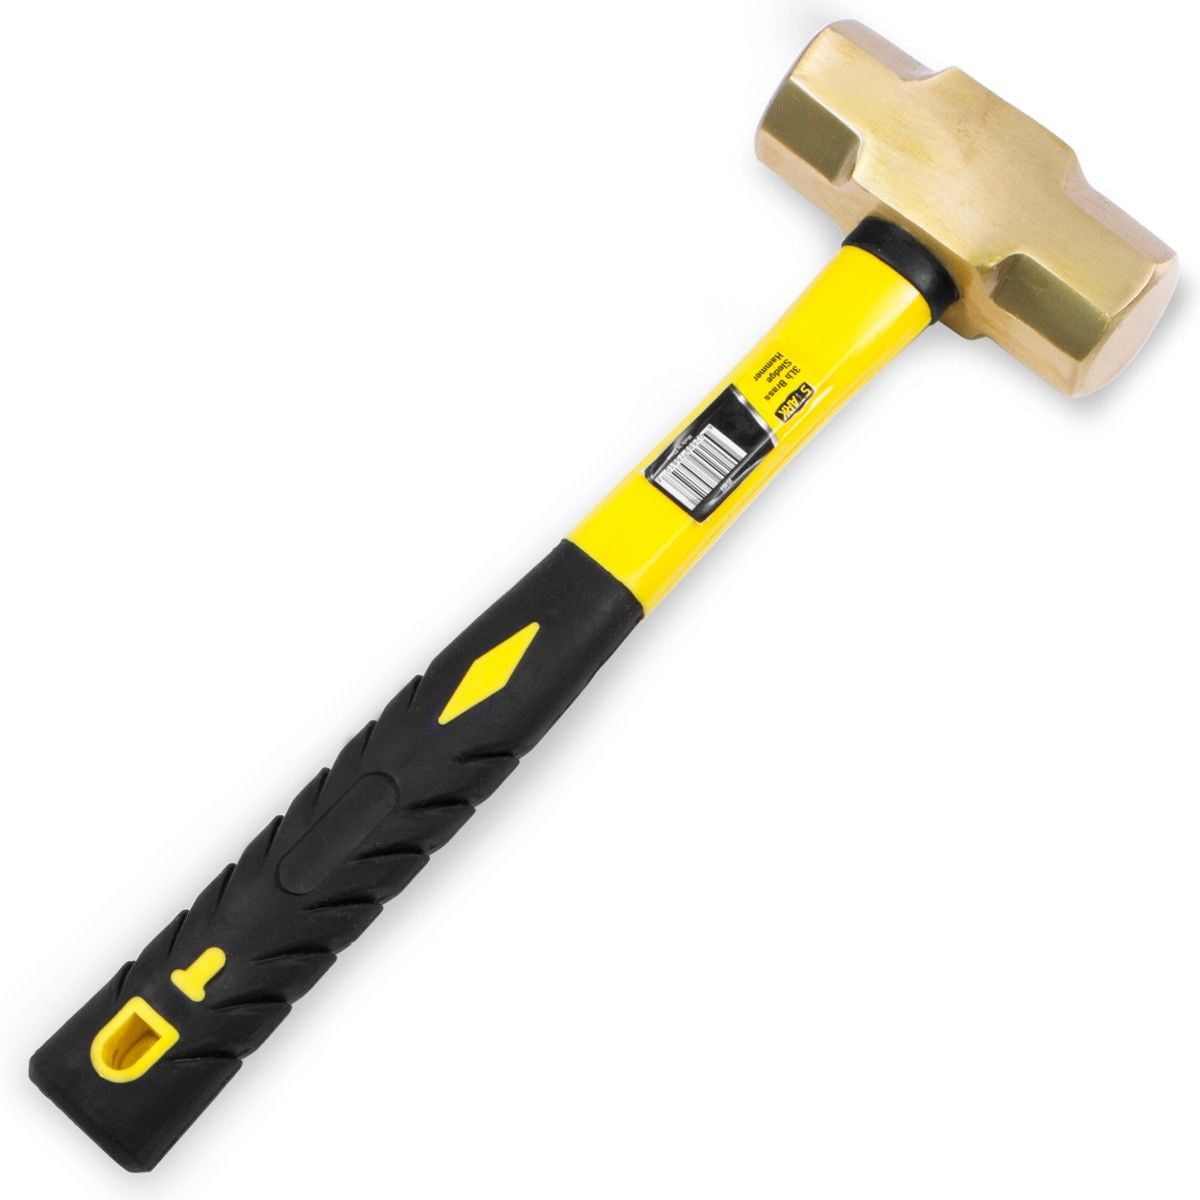 Details about   Klein Tools Sledge Hammer Brass Head Fiberglass Rubber Grip Handle 16 in 4 lbs. 